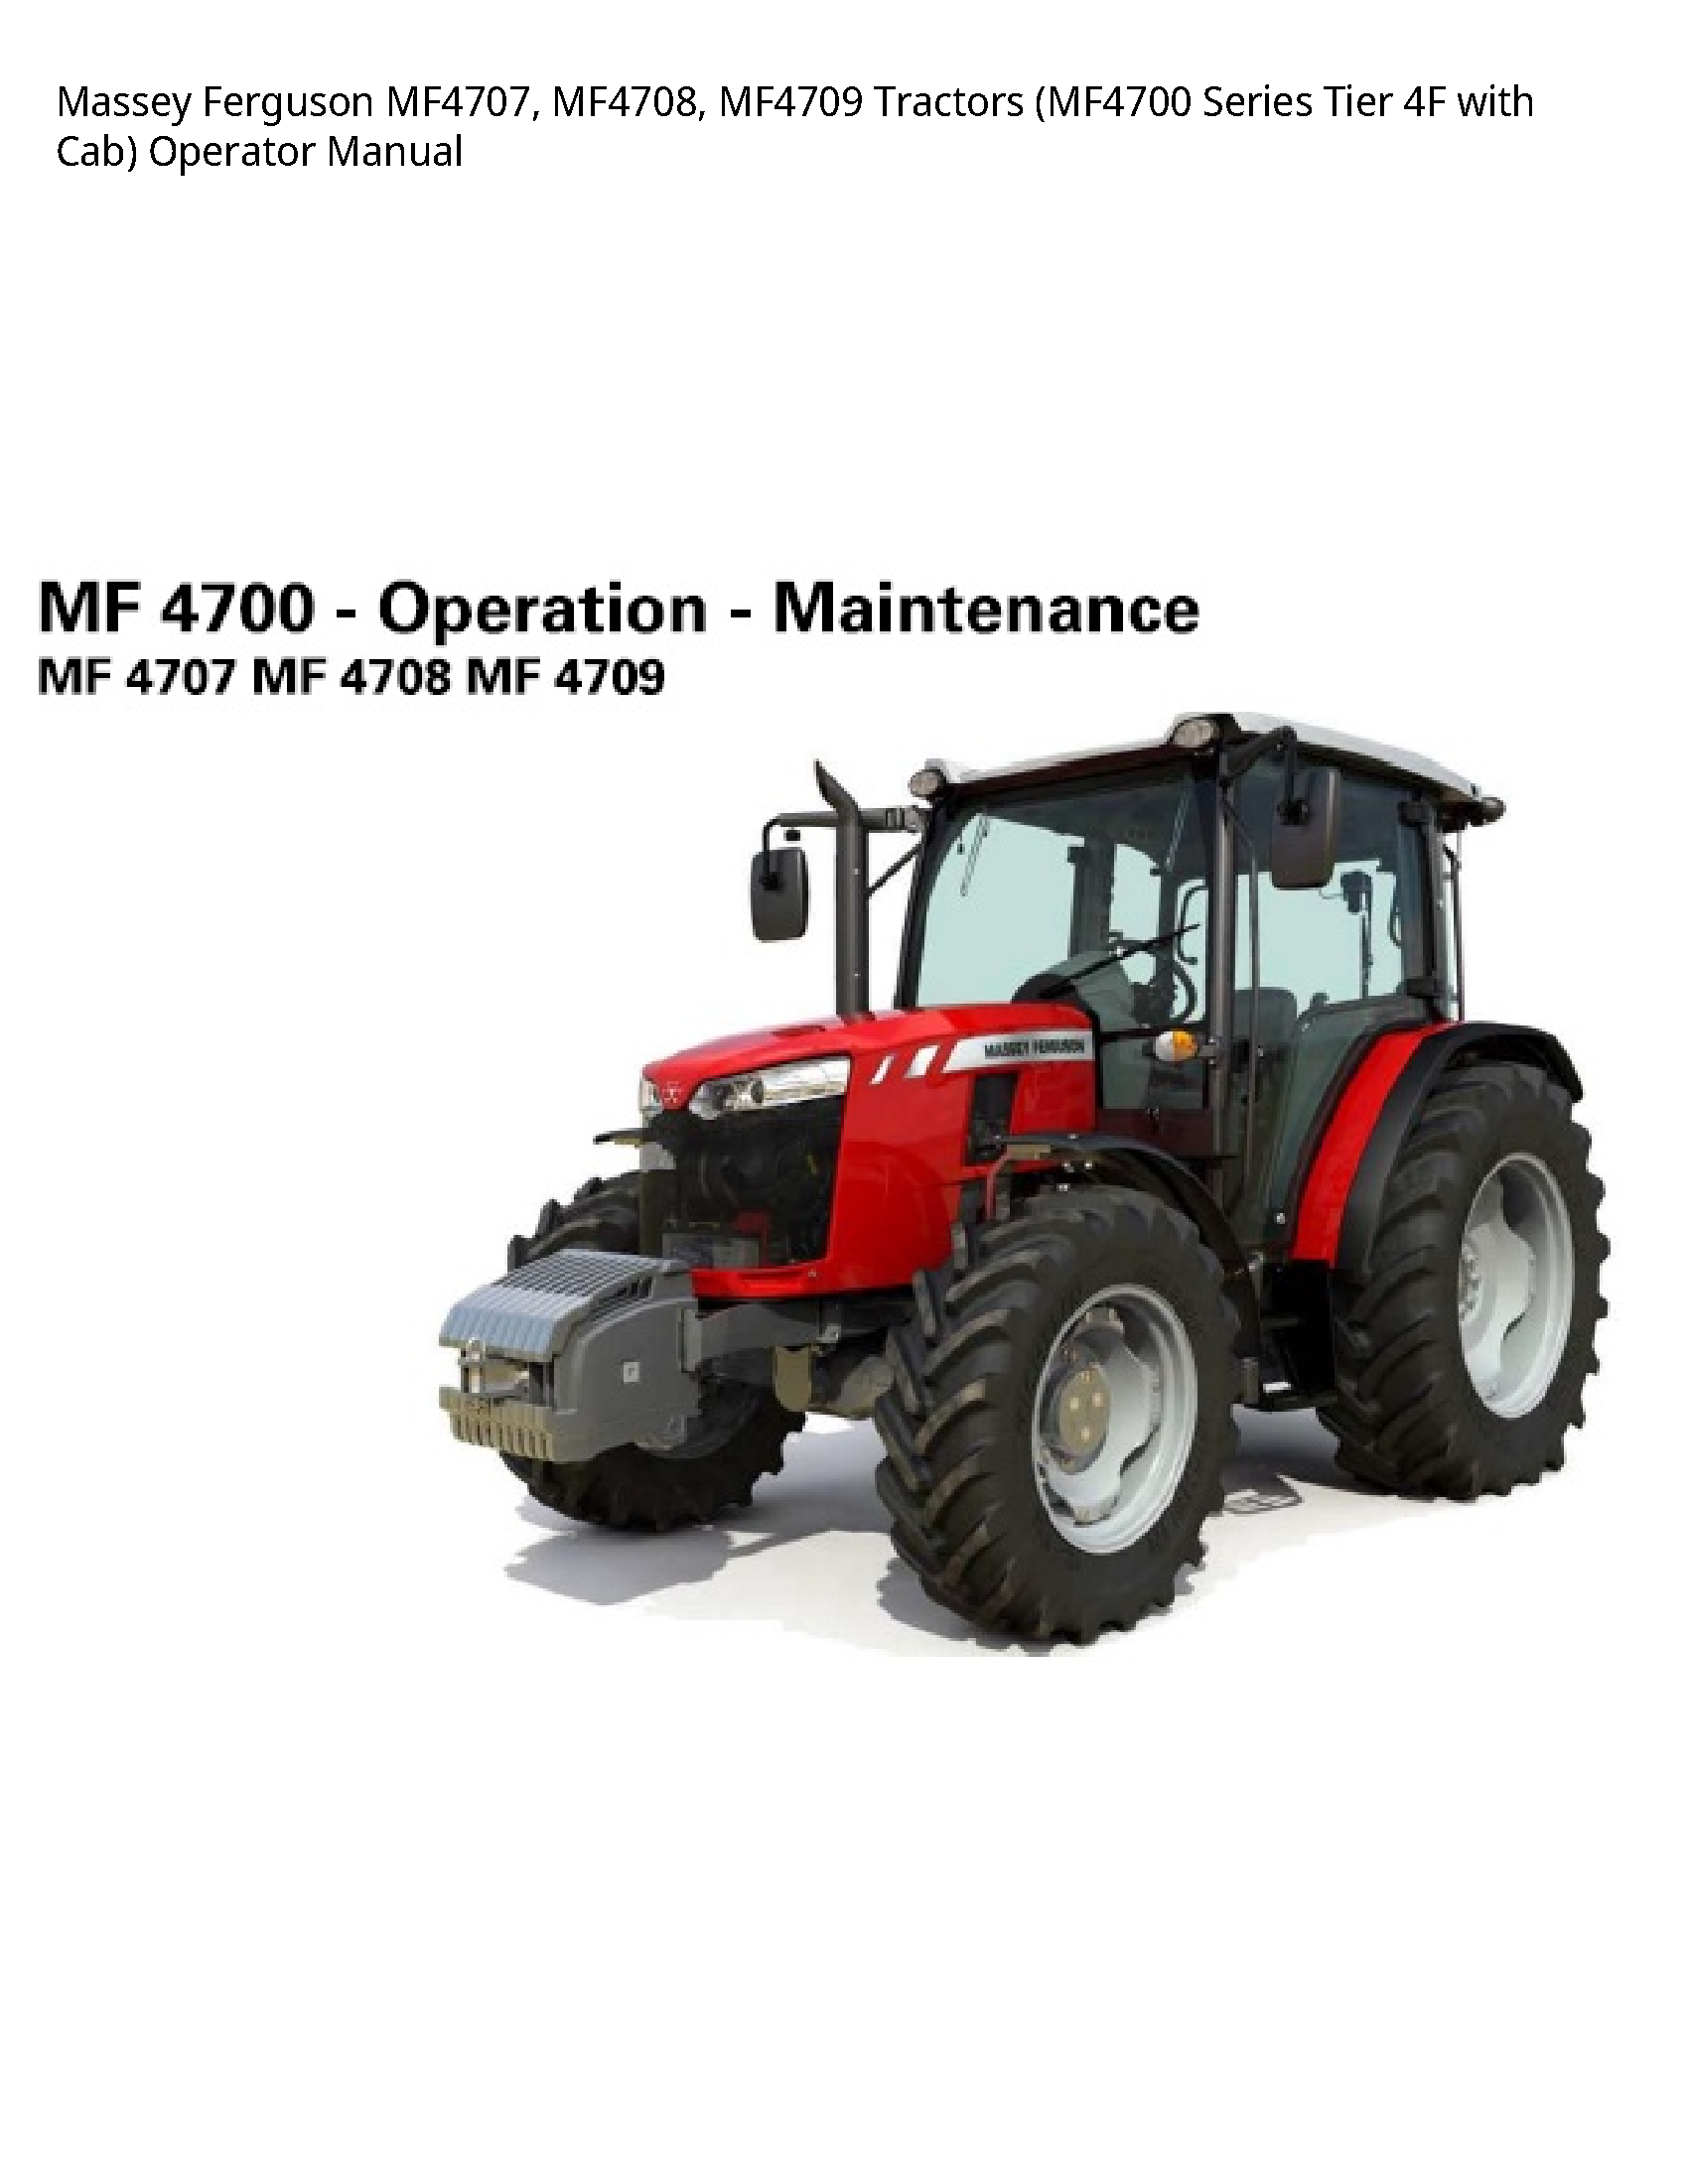 Massey Ferguson MF4707 Tractors Series Tier with Cab) Operator manual